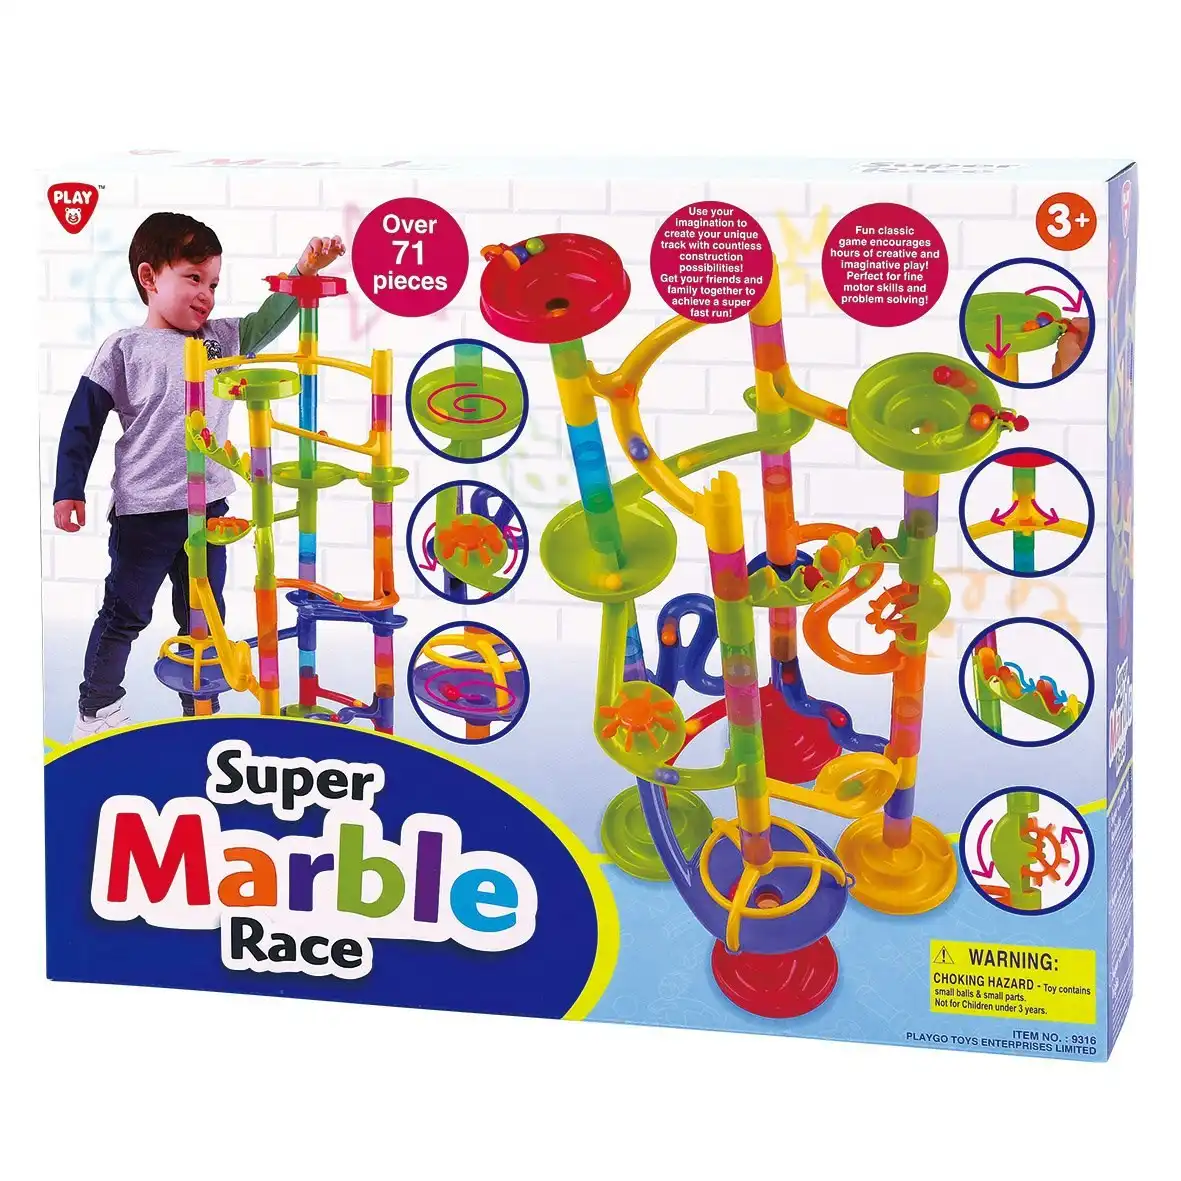 Playgo Toys Ent. Ltd. - Super Marble Race Playset - 71 Pieces